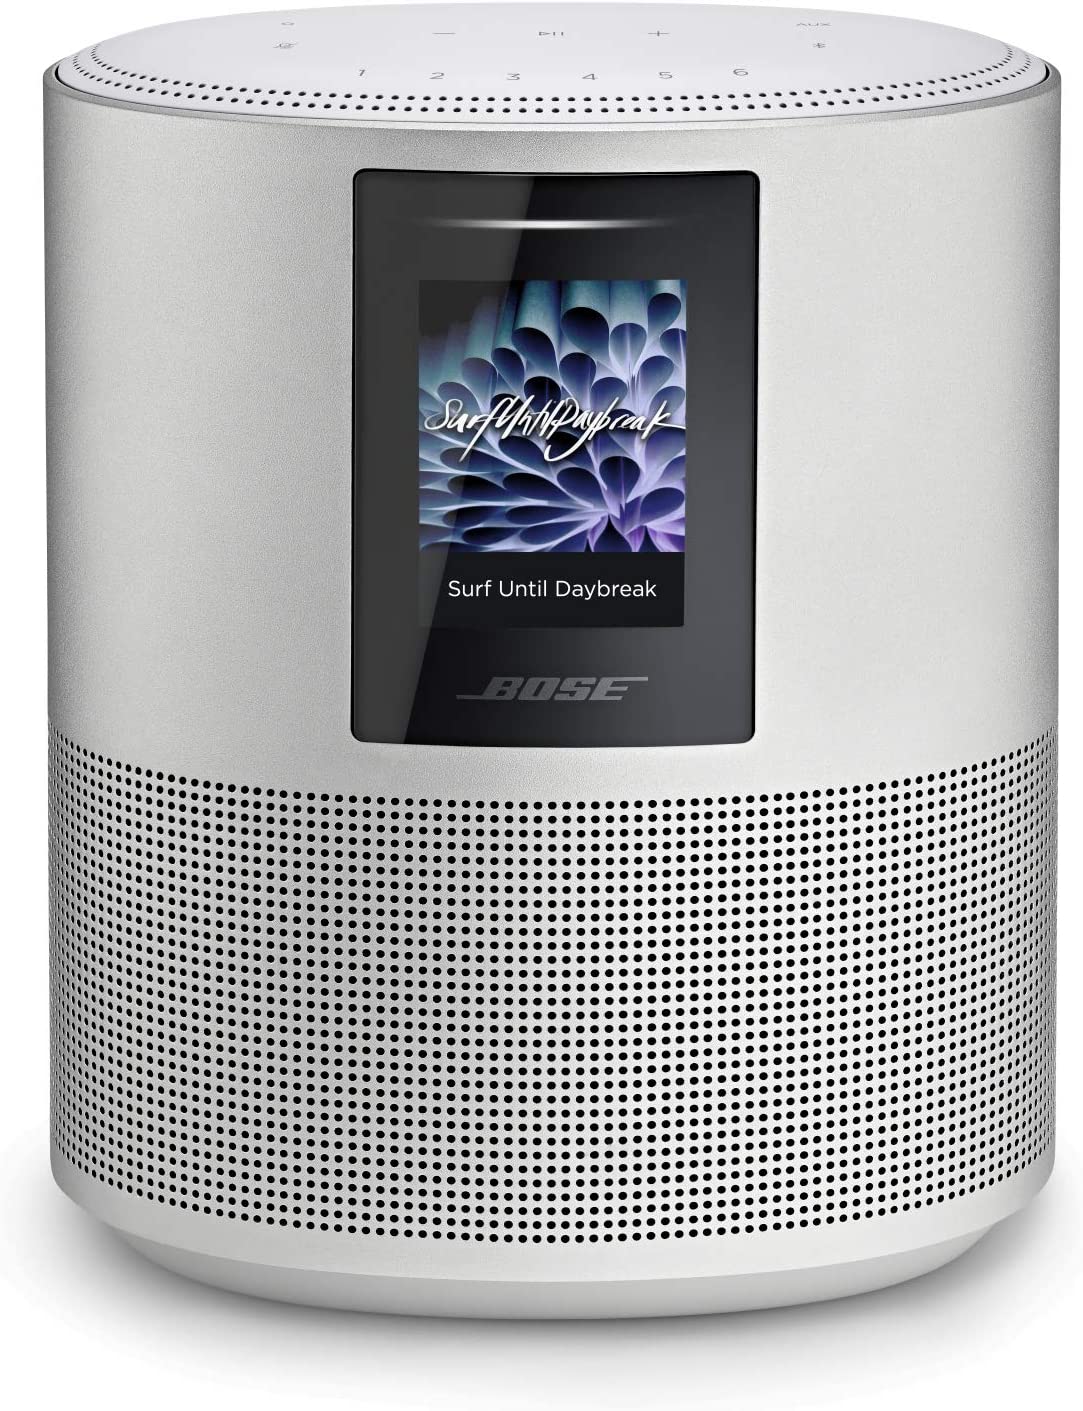 Bose Home Speaker 500: Smart Bluetooth Speaker with Alexa Voice Control Built-In, Black...